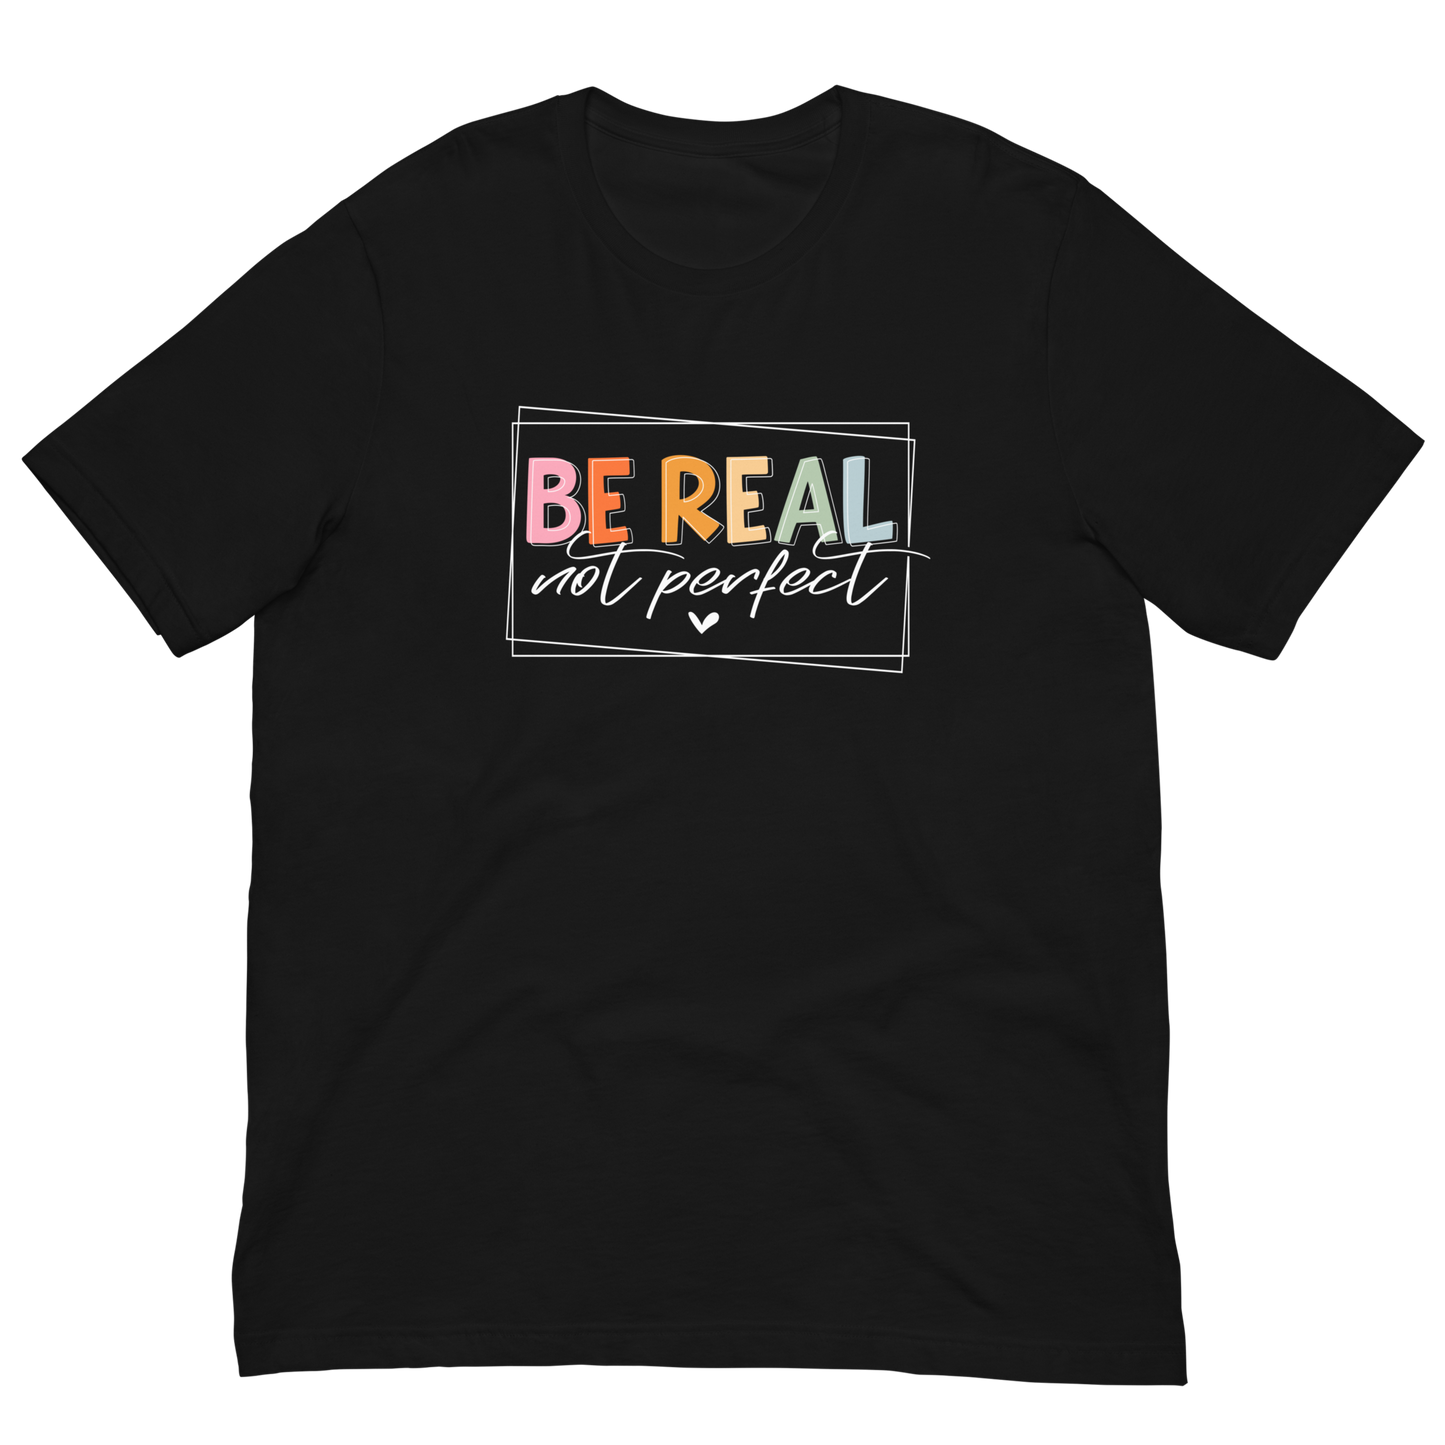 Unisex marškinėliai: "Be real, not perfect"